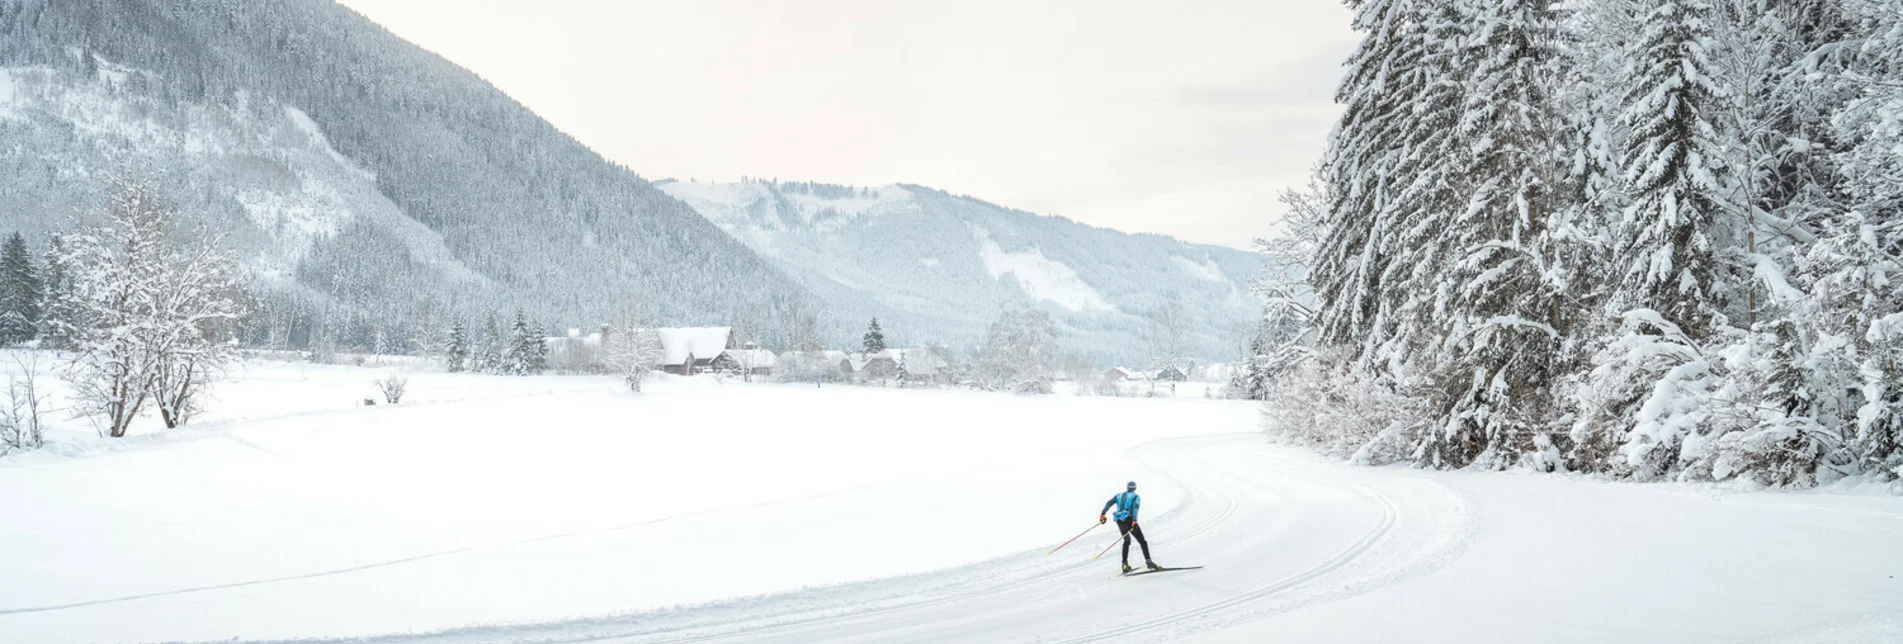 Ski-nordic-classic Pyhrn Loipe - Touren-Impression #1 | © TV Gesäuse